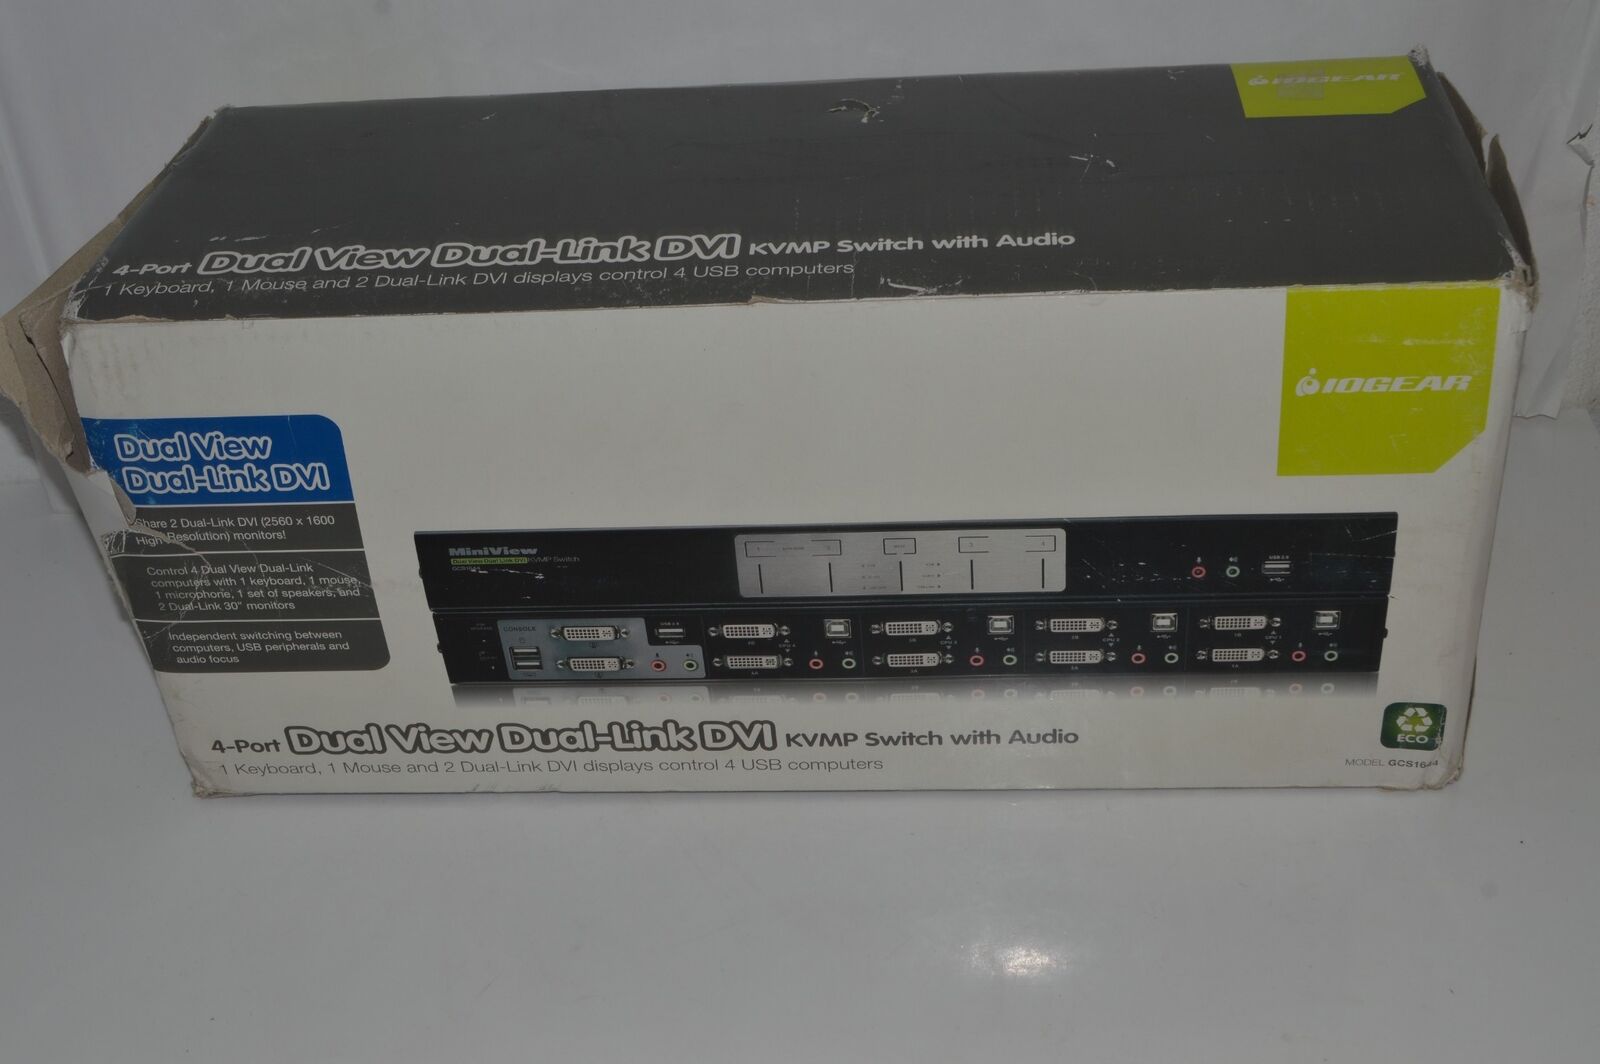 Iogear GCS1644 MiniView 4-Port Dual View Dual-Link DVI KVMP -NEW IN BOX  (TGS14)